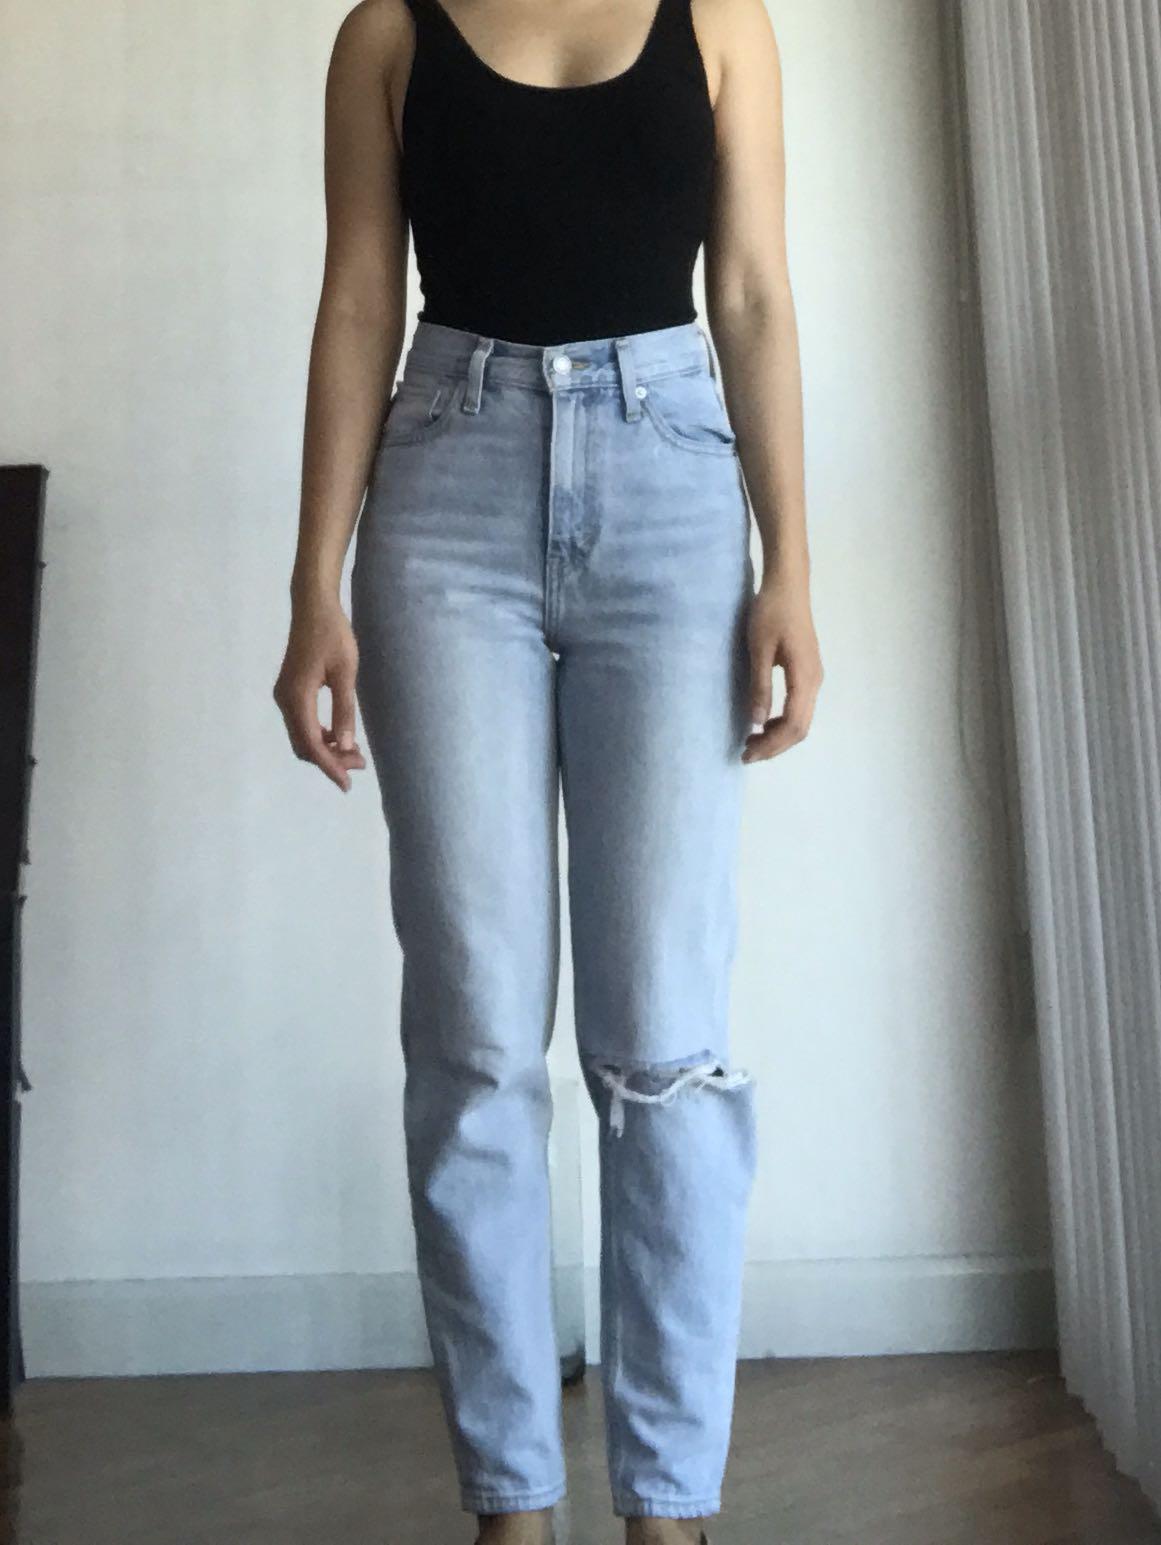 abrand 94 high slim jeans